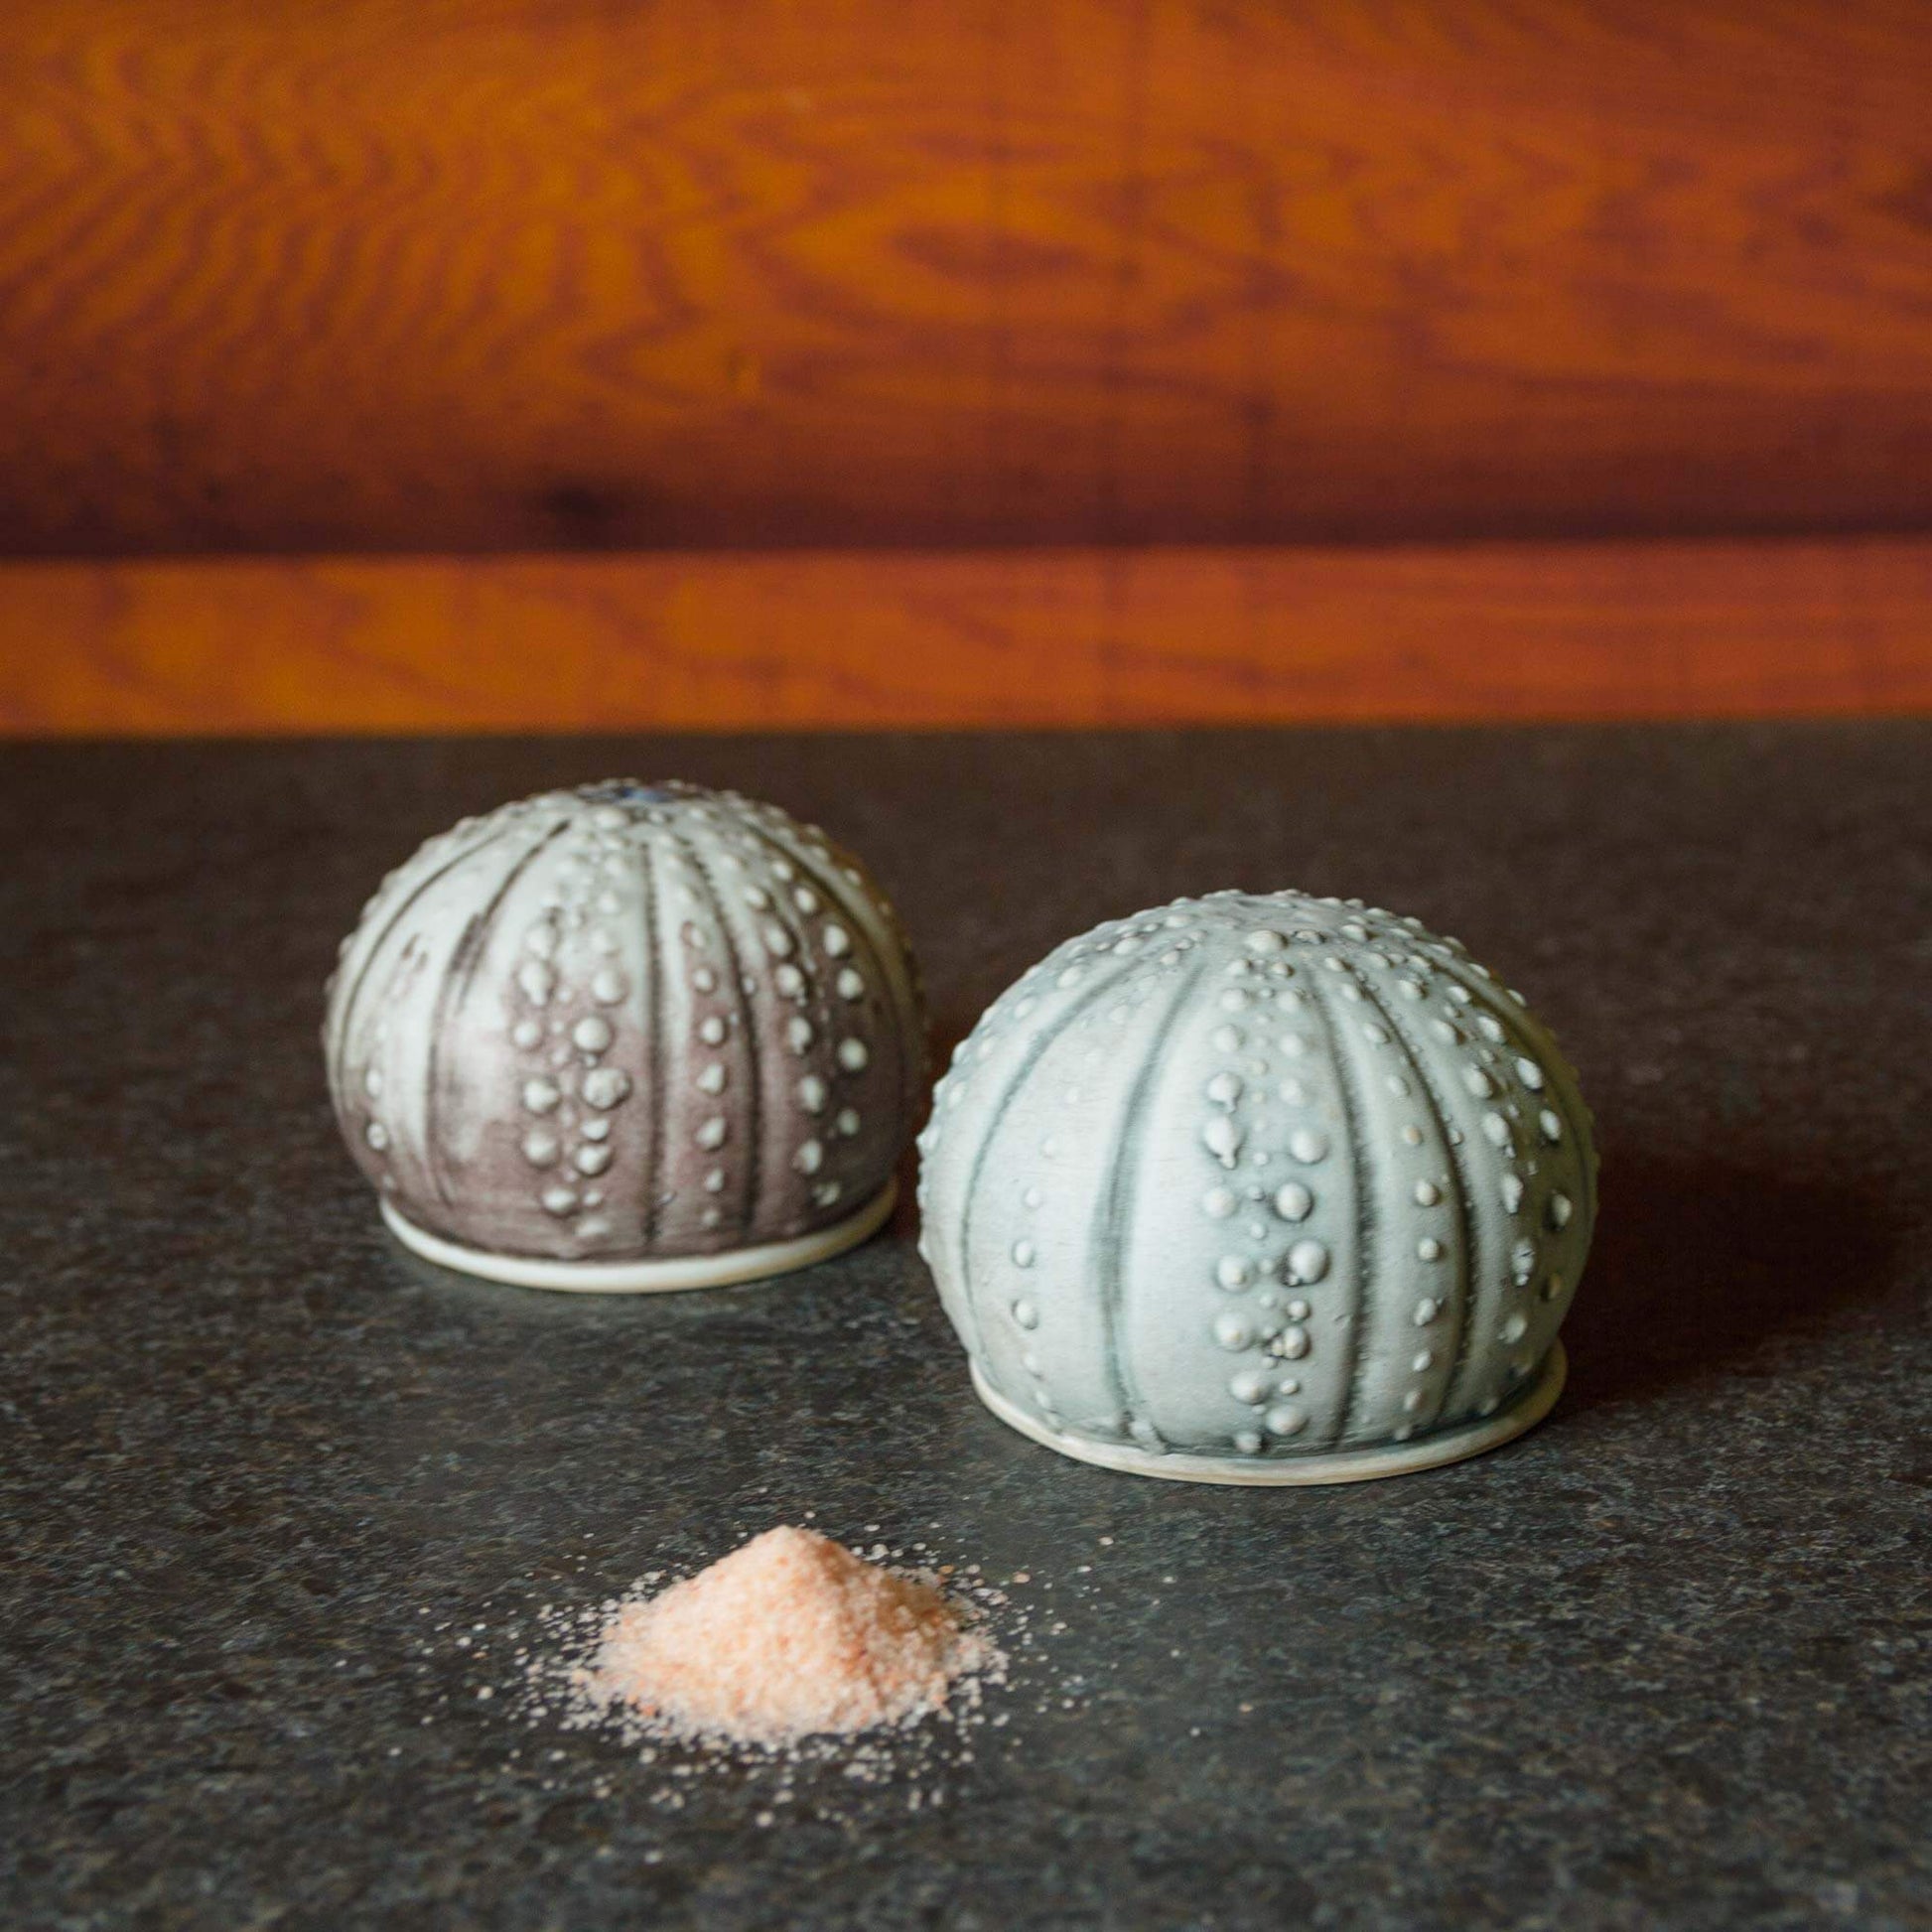 Handmade Salt Urchin Salt Shaker made by Georgetown Pottery in Maine